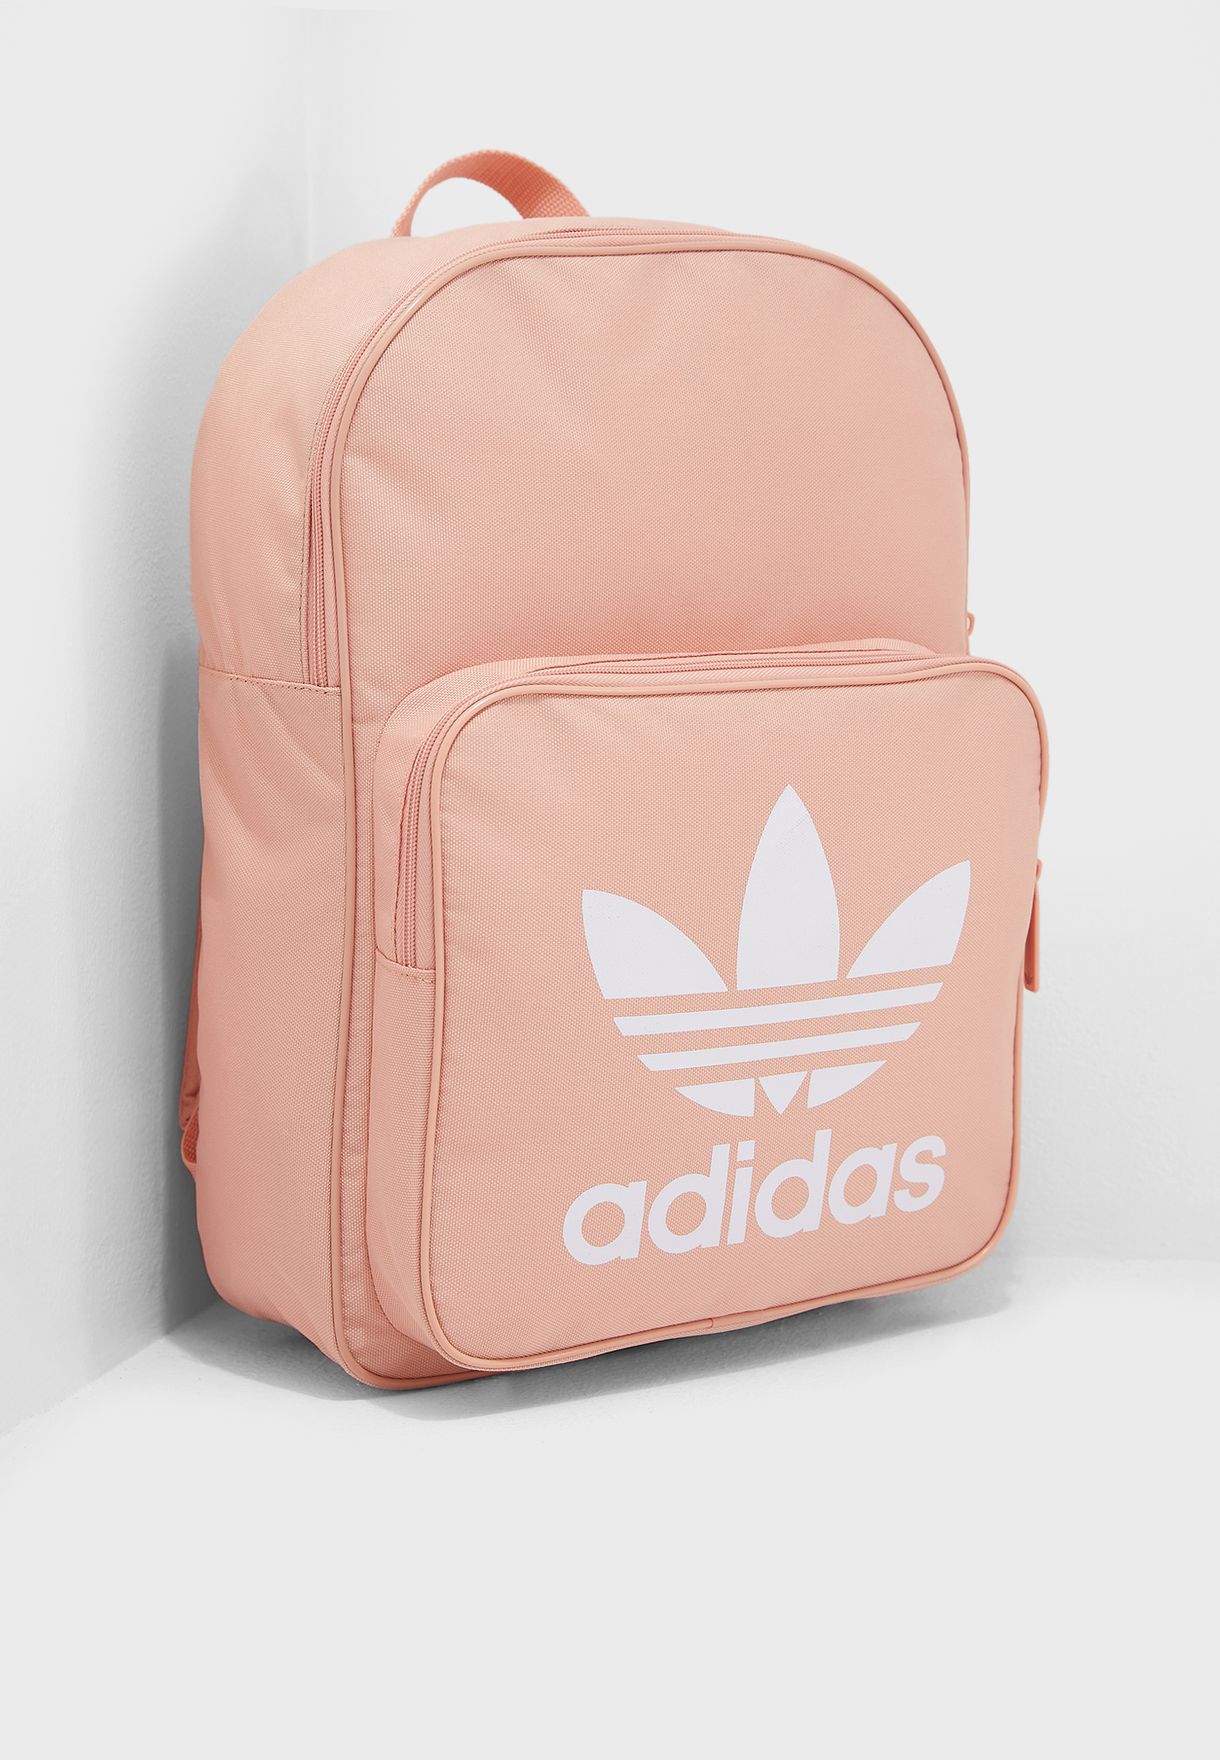 adidas backpack trefoil